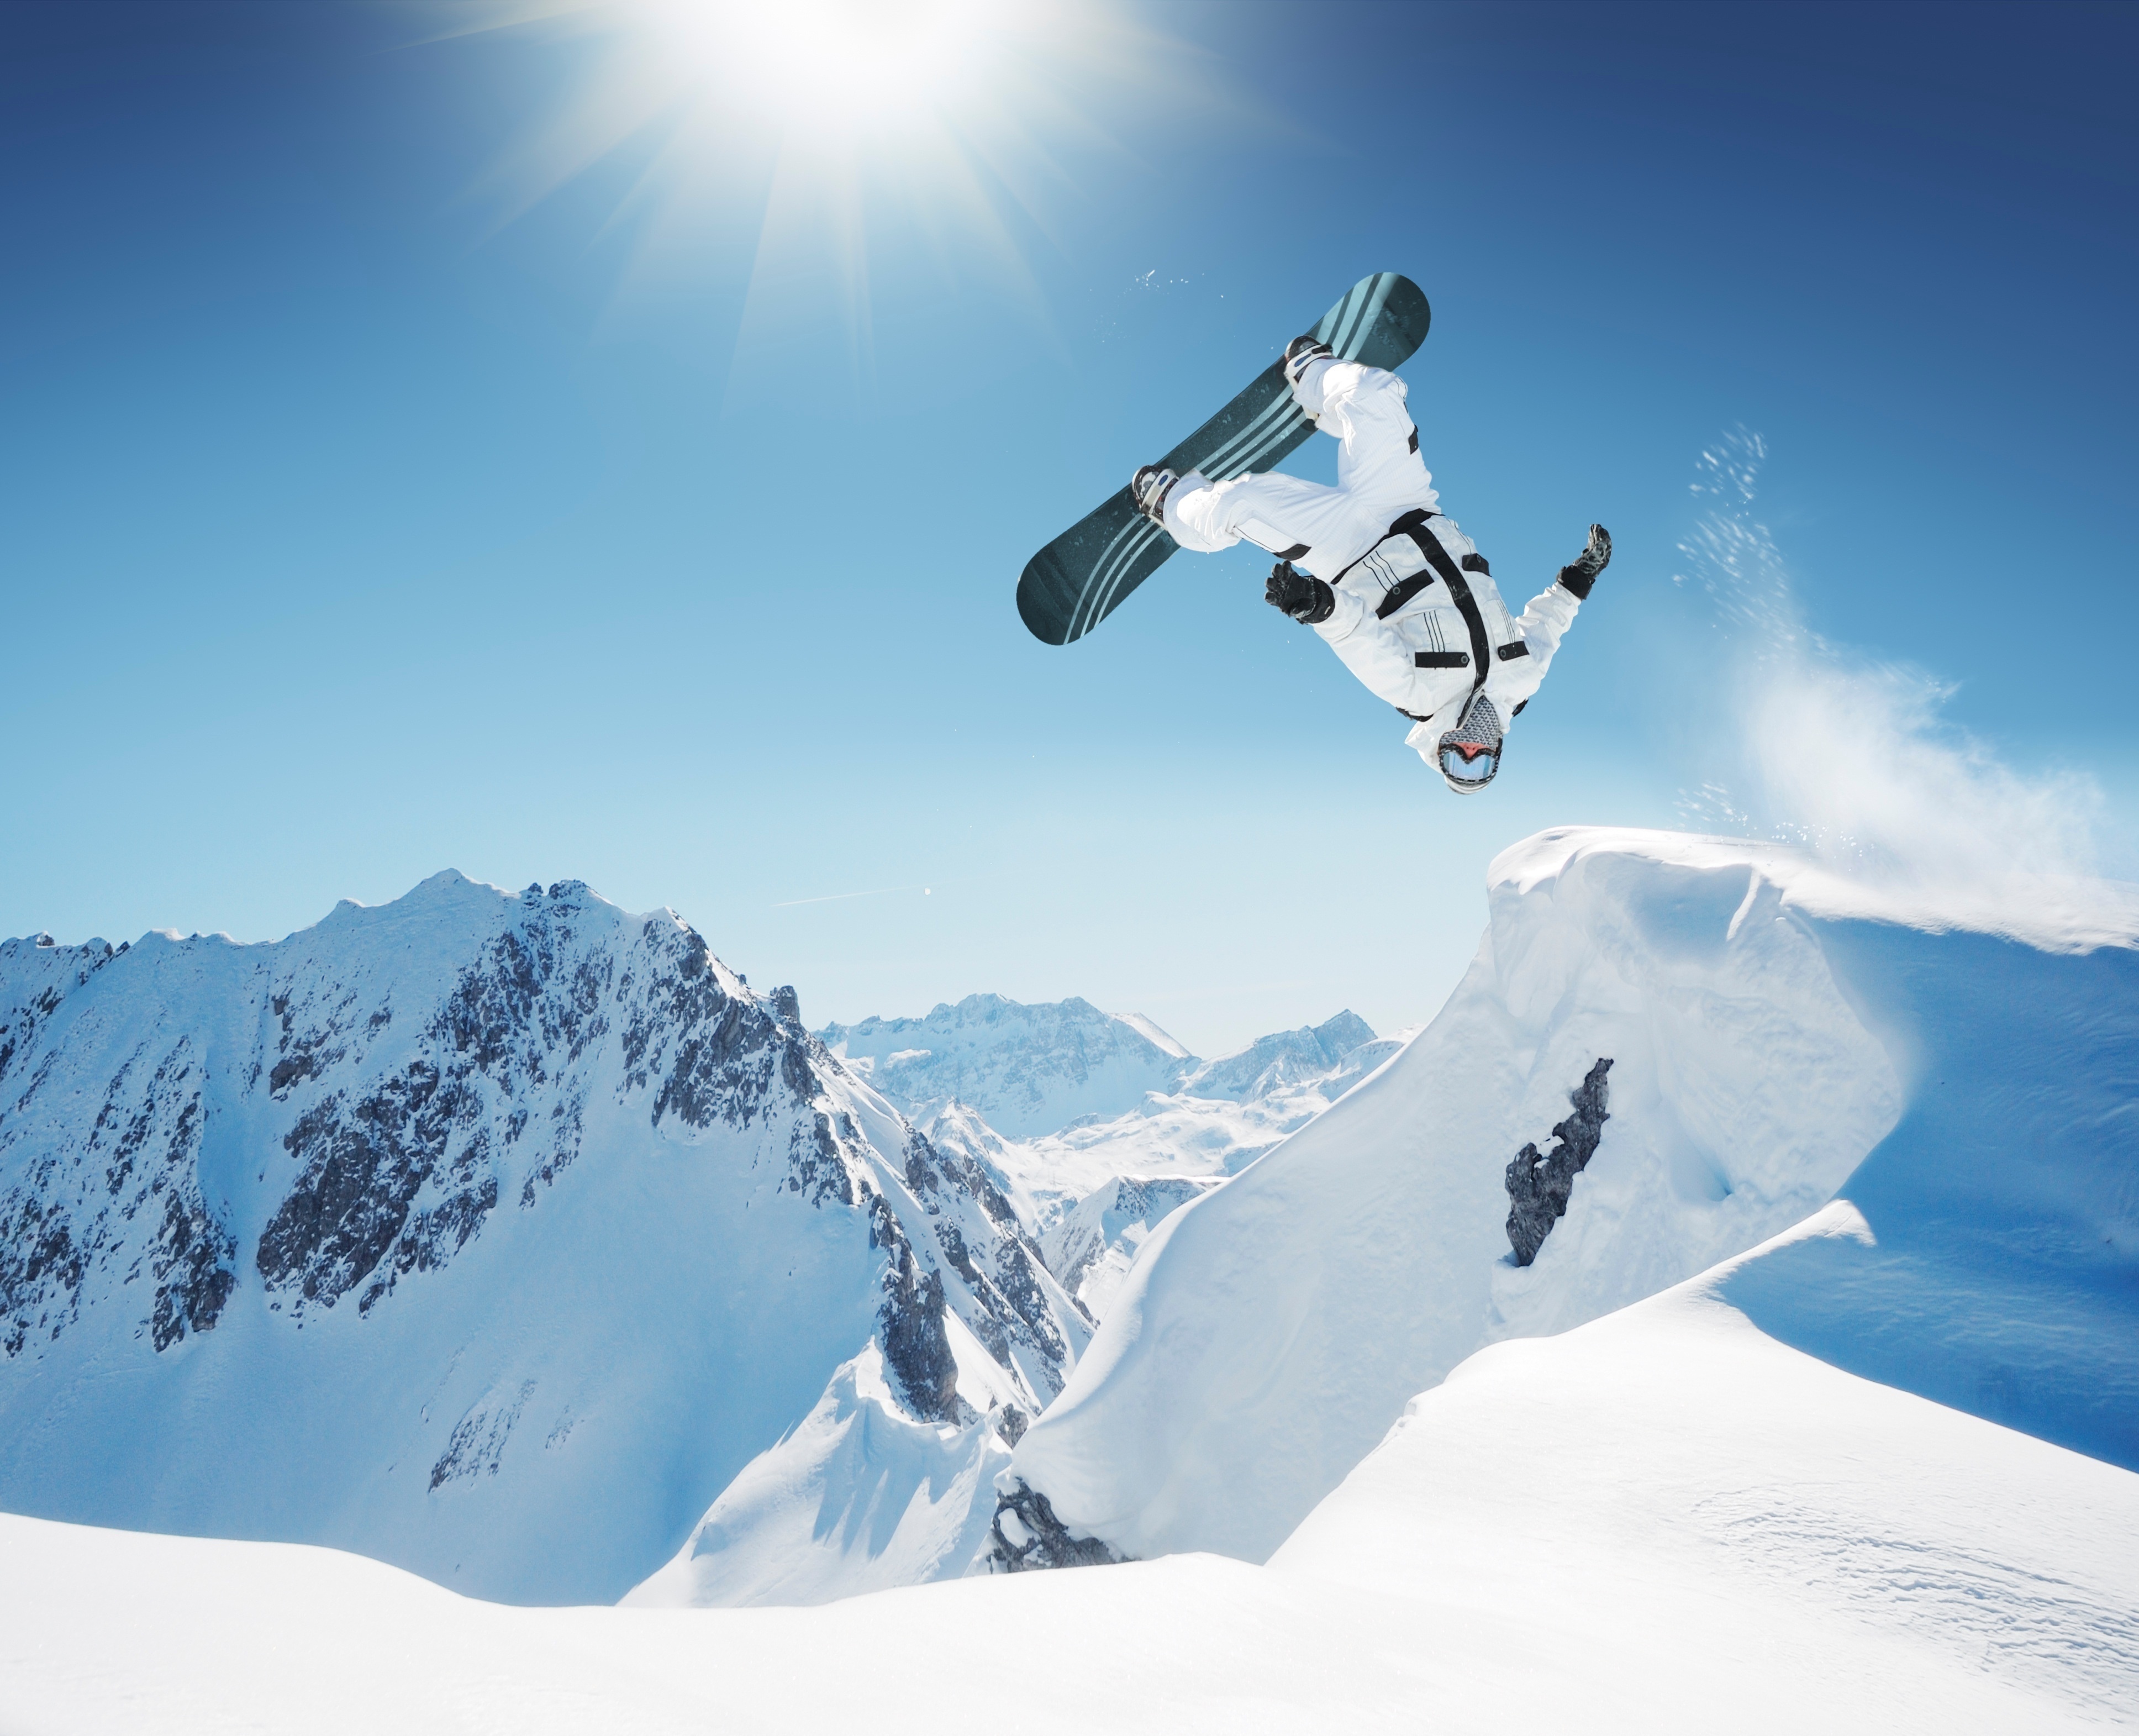 Snowboarding Desktop Wallpaper On Latoro